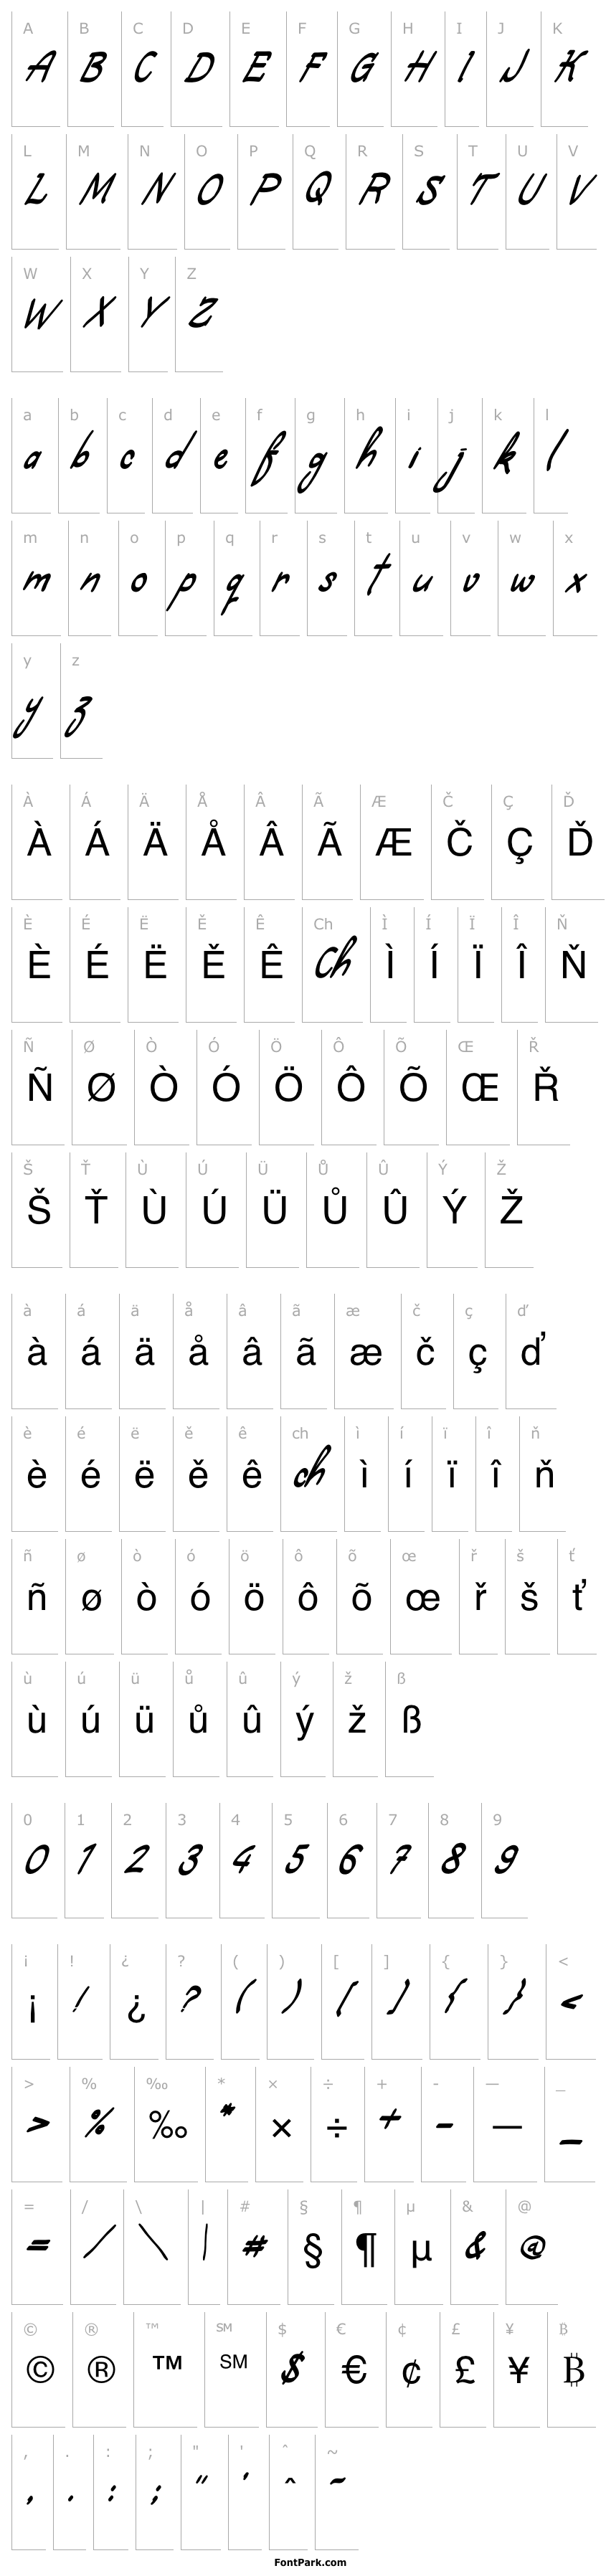 Overview Ambarawa Script